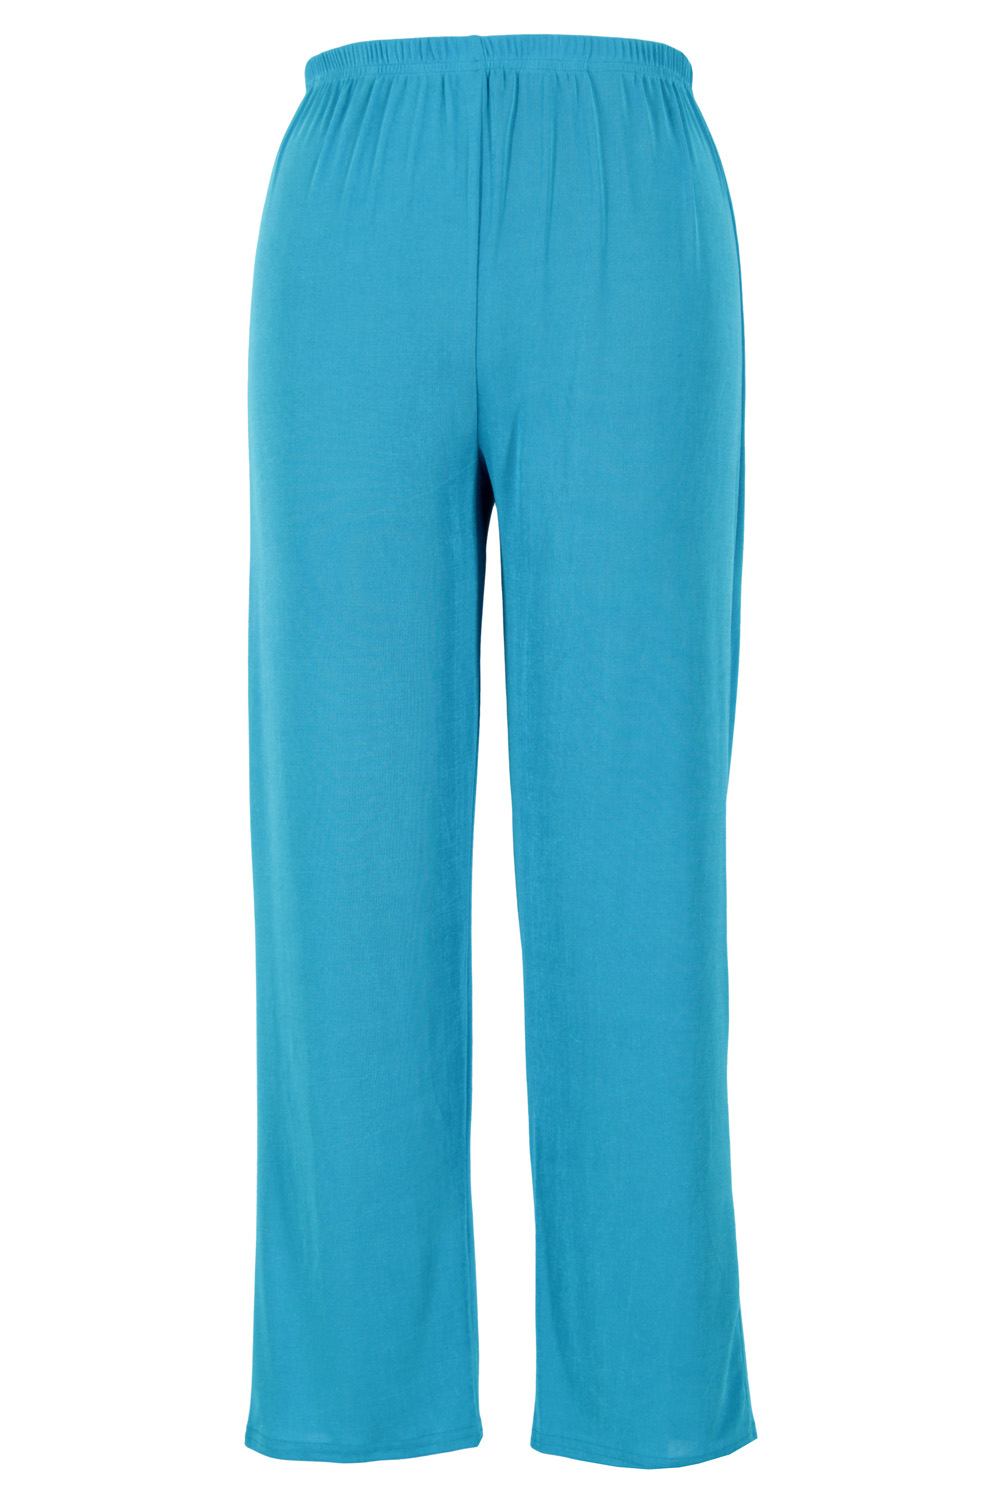 BNS Big Pants-Jostar Clothing Wholesale | Ladies Wholesale Clothing ...